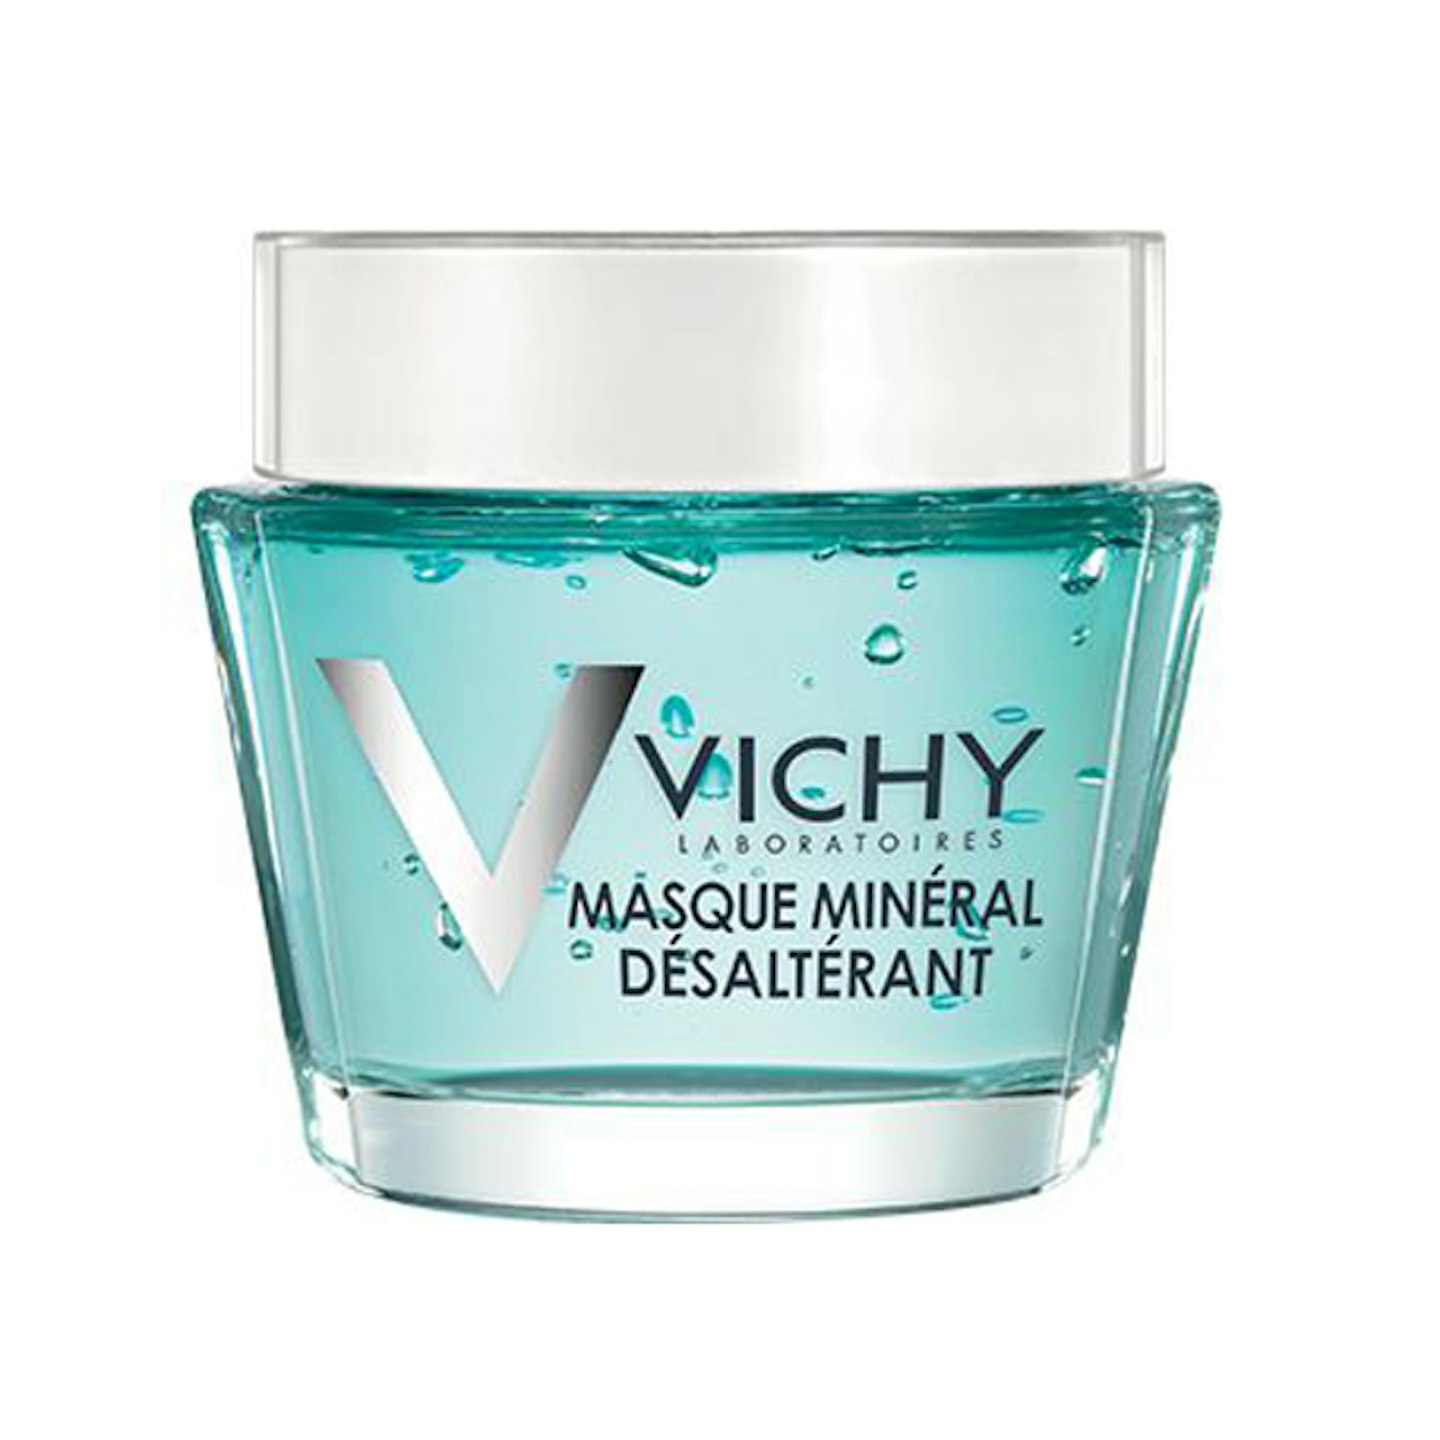 vichy masque mineral